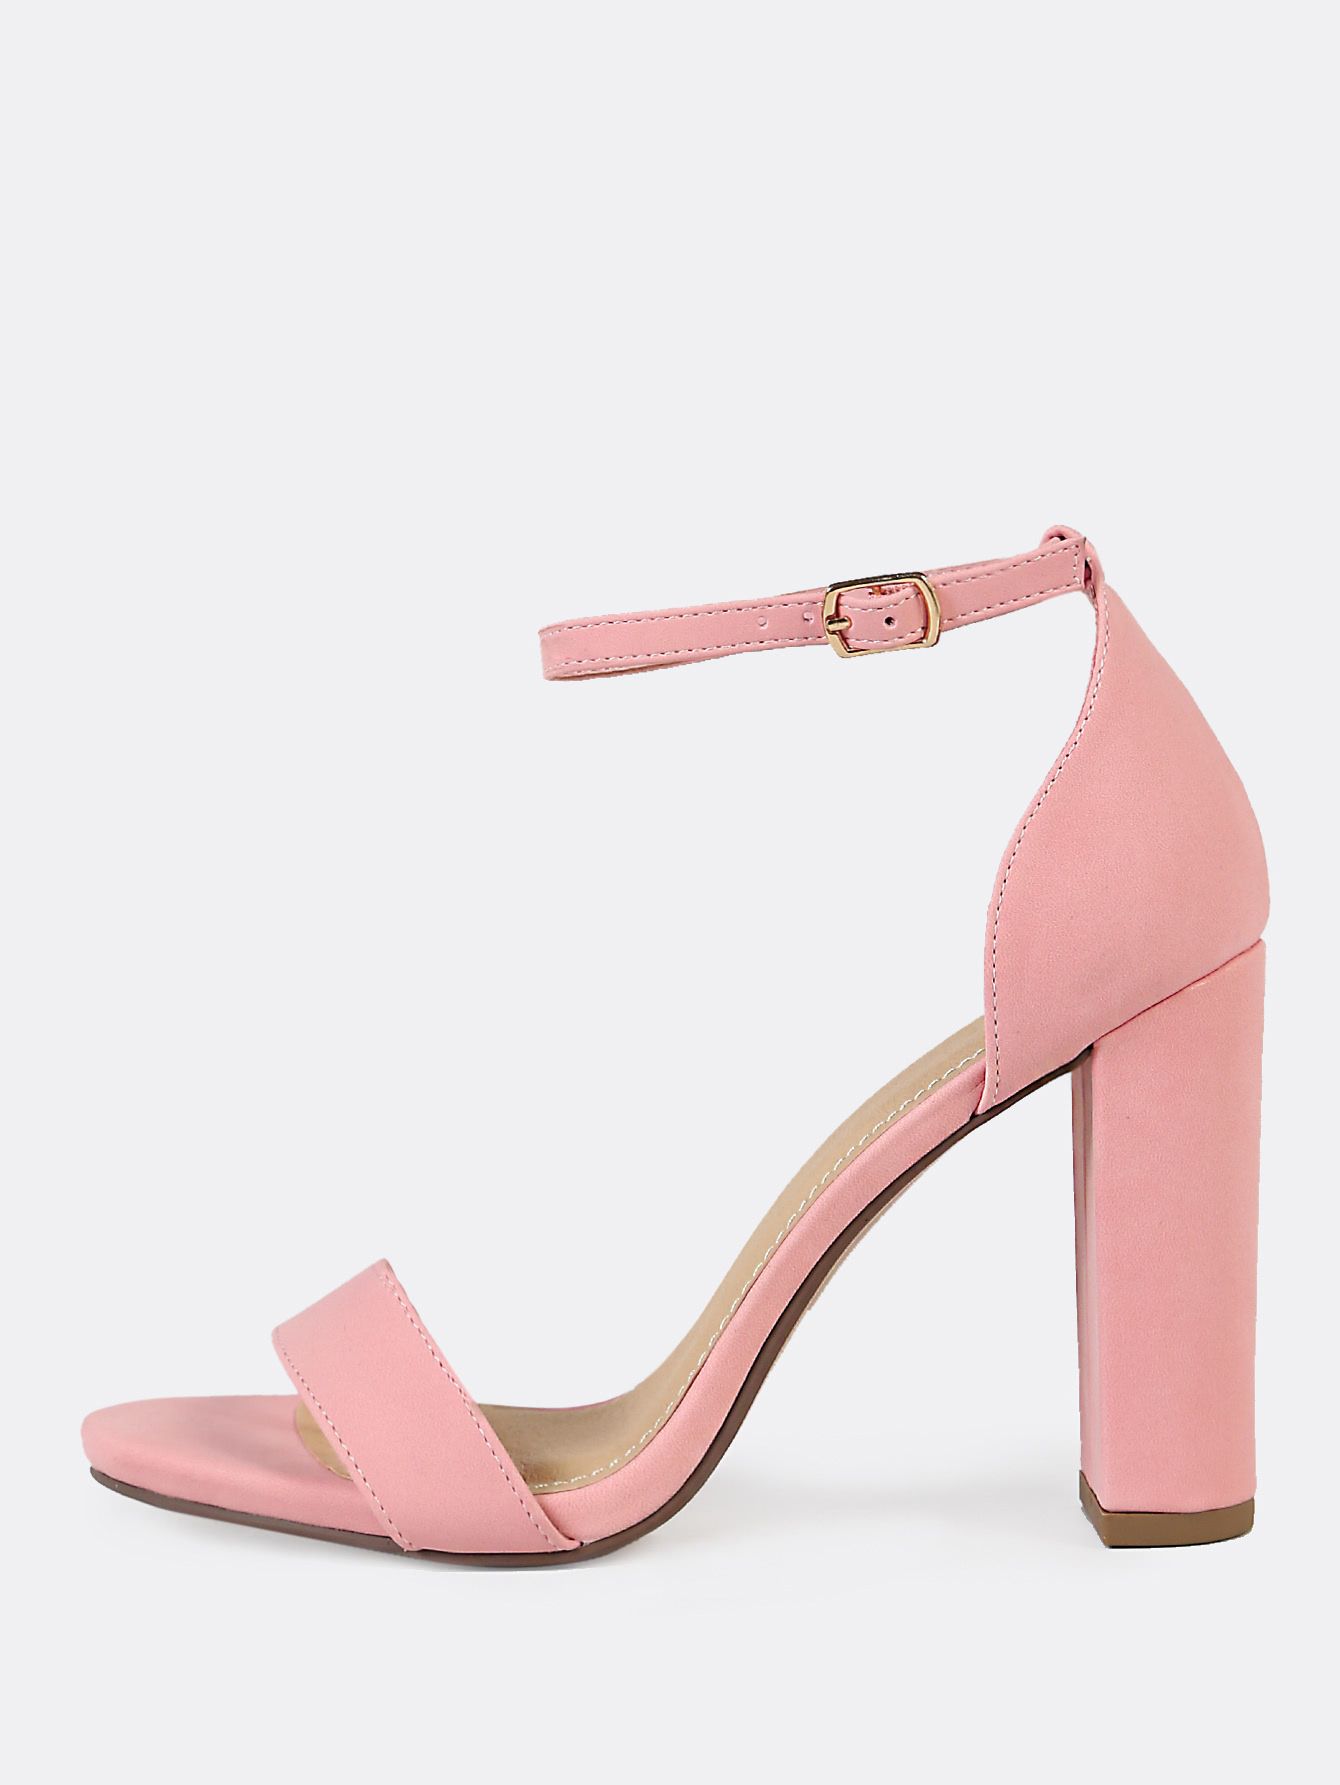 Stylish Ways to Wear Light Pink Heels
This Season